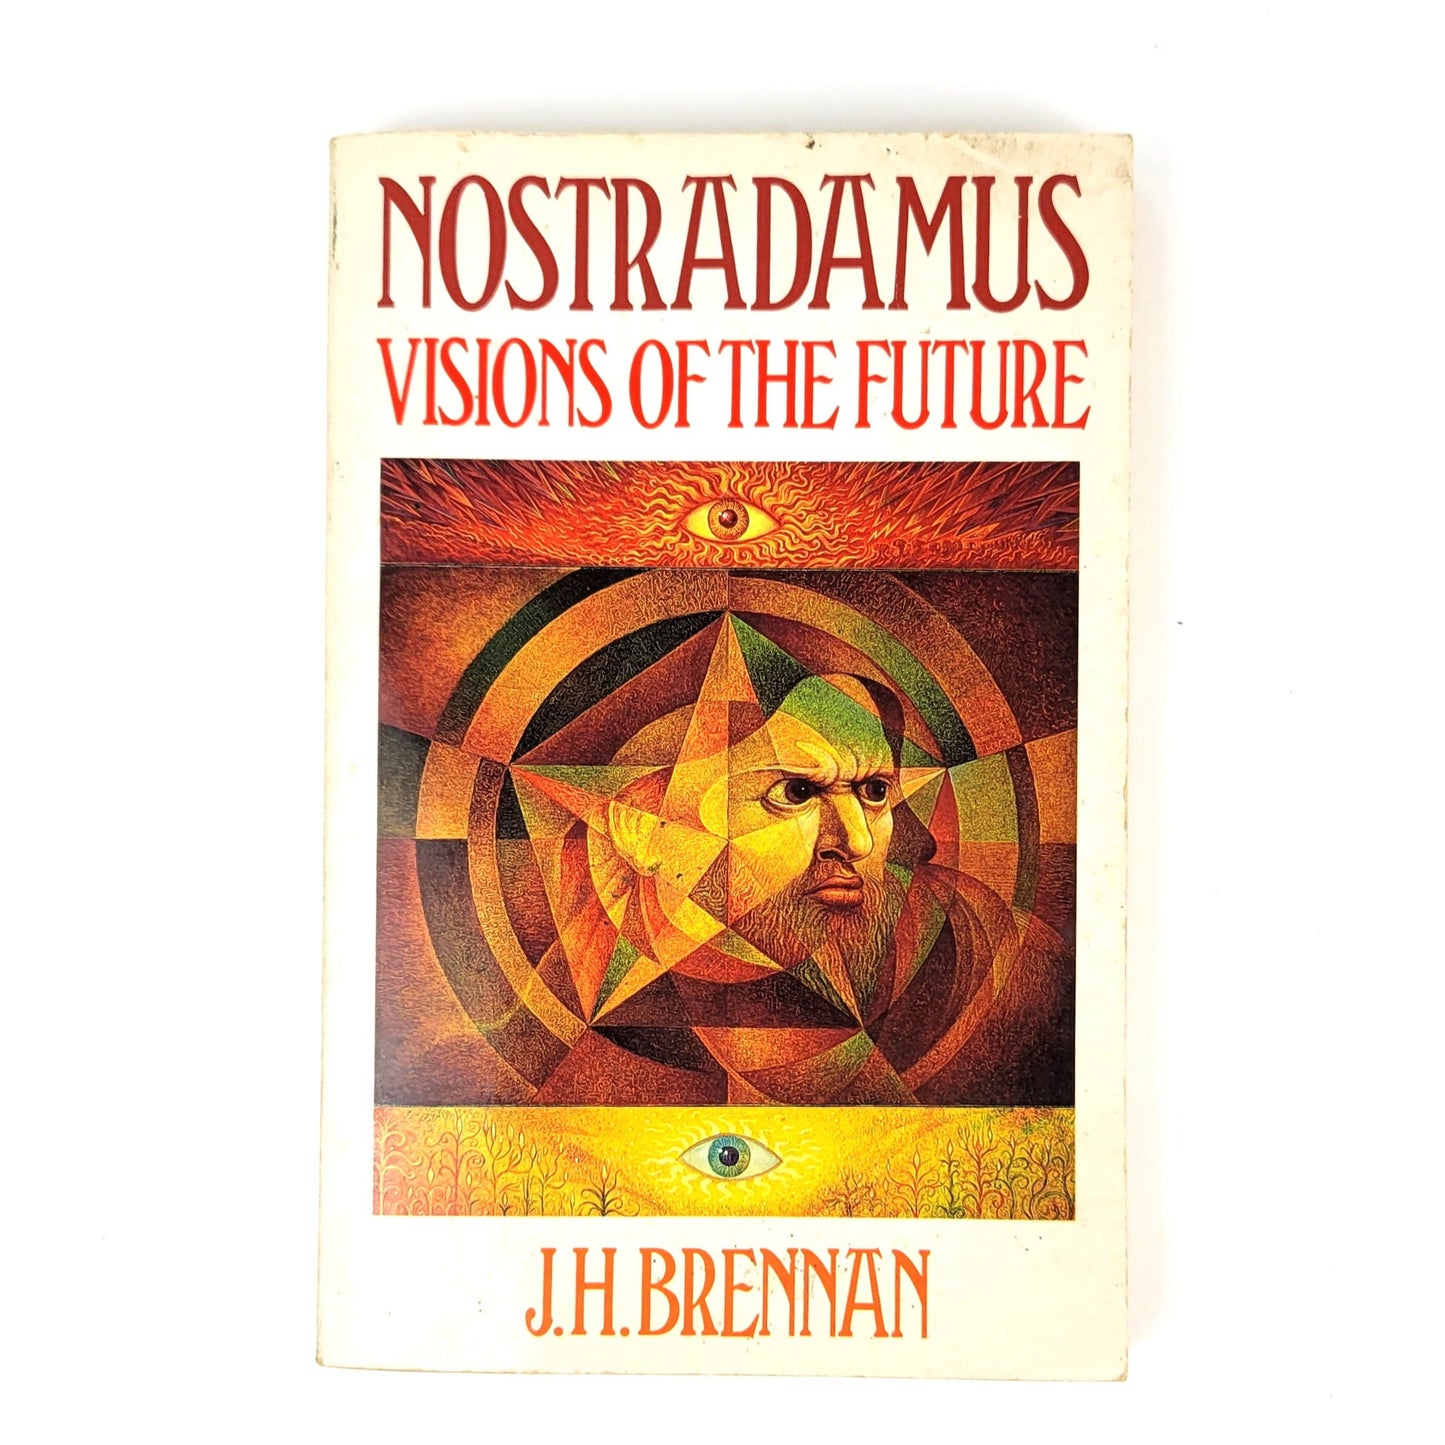 Nostradamus: Visions of the Future by J H Brennan